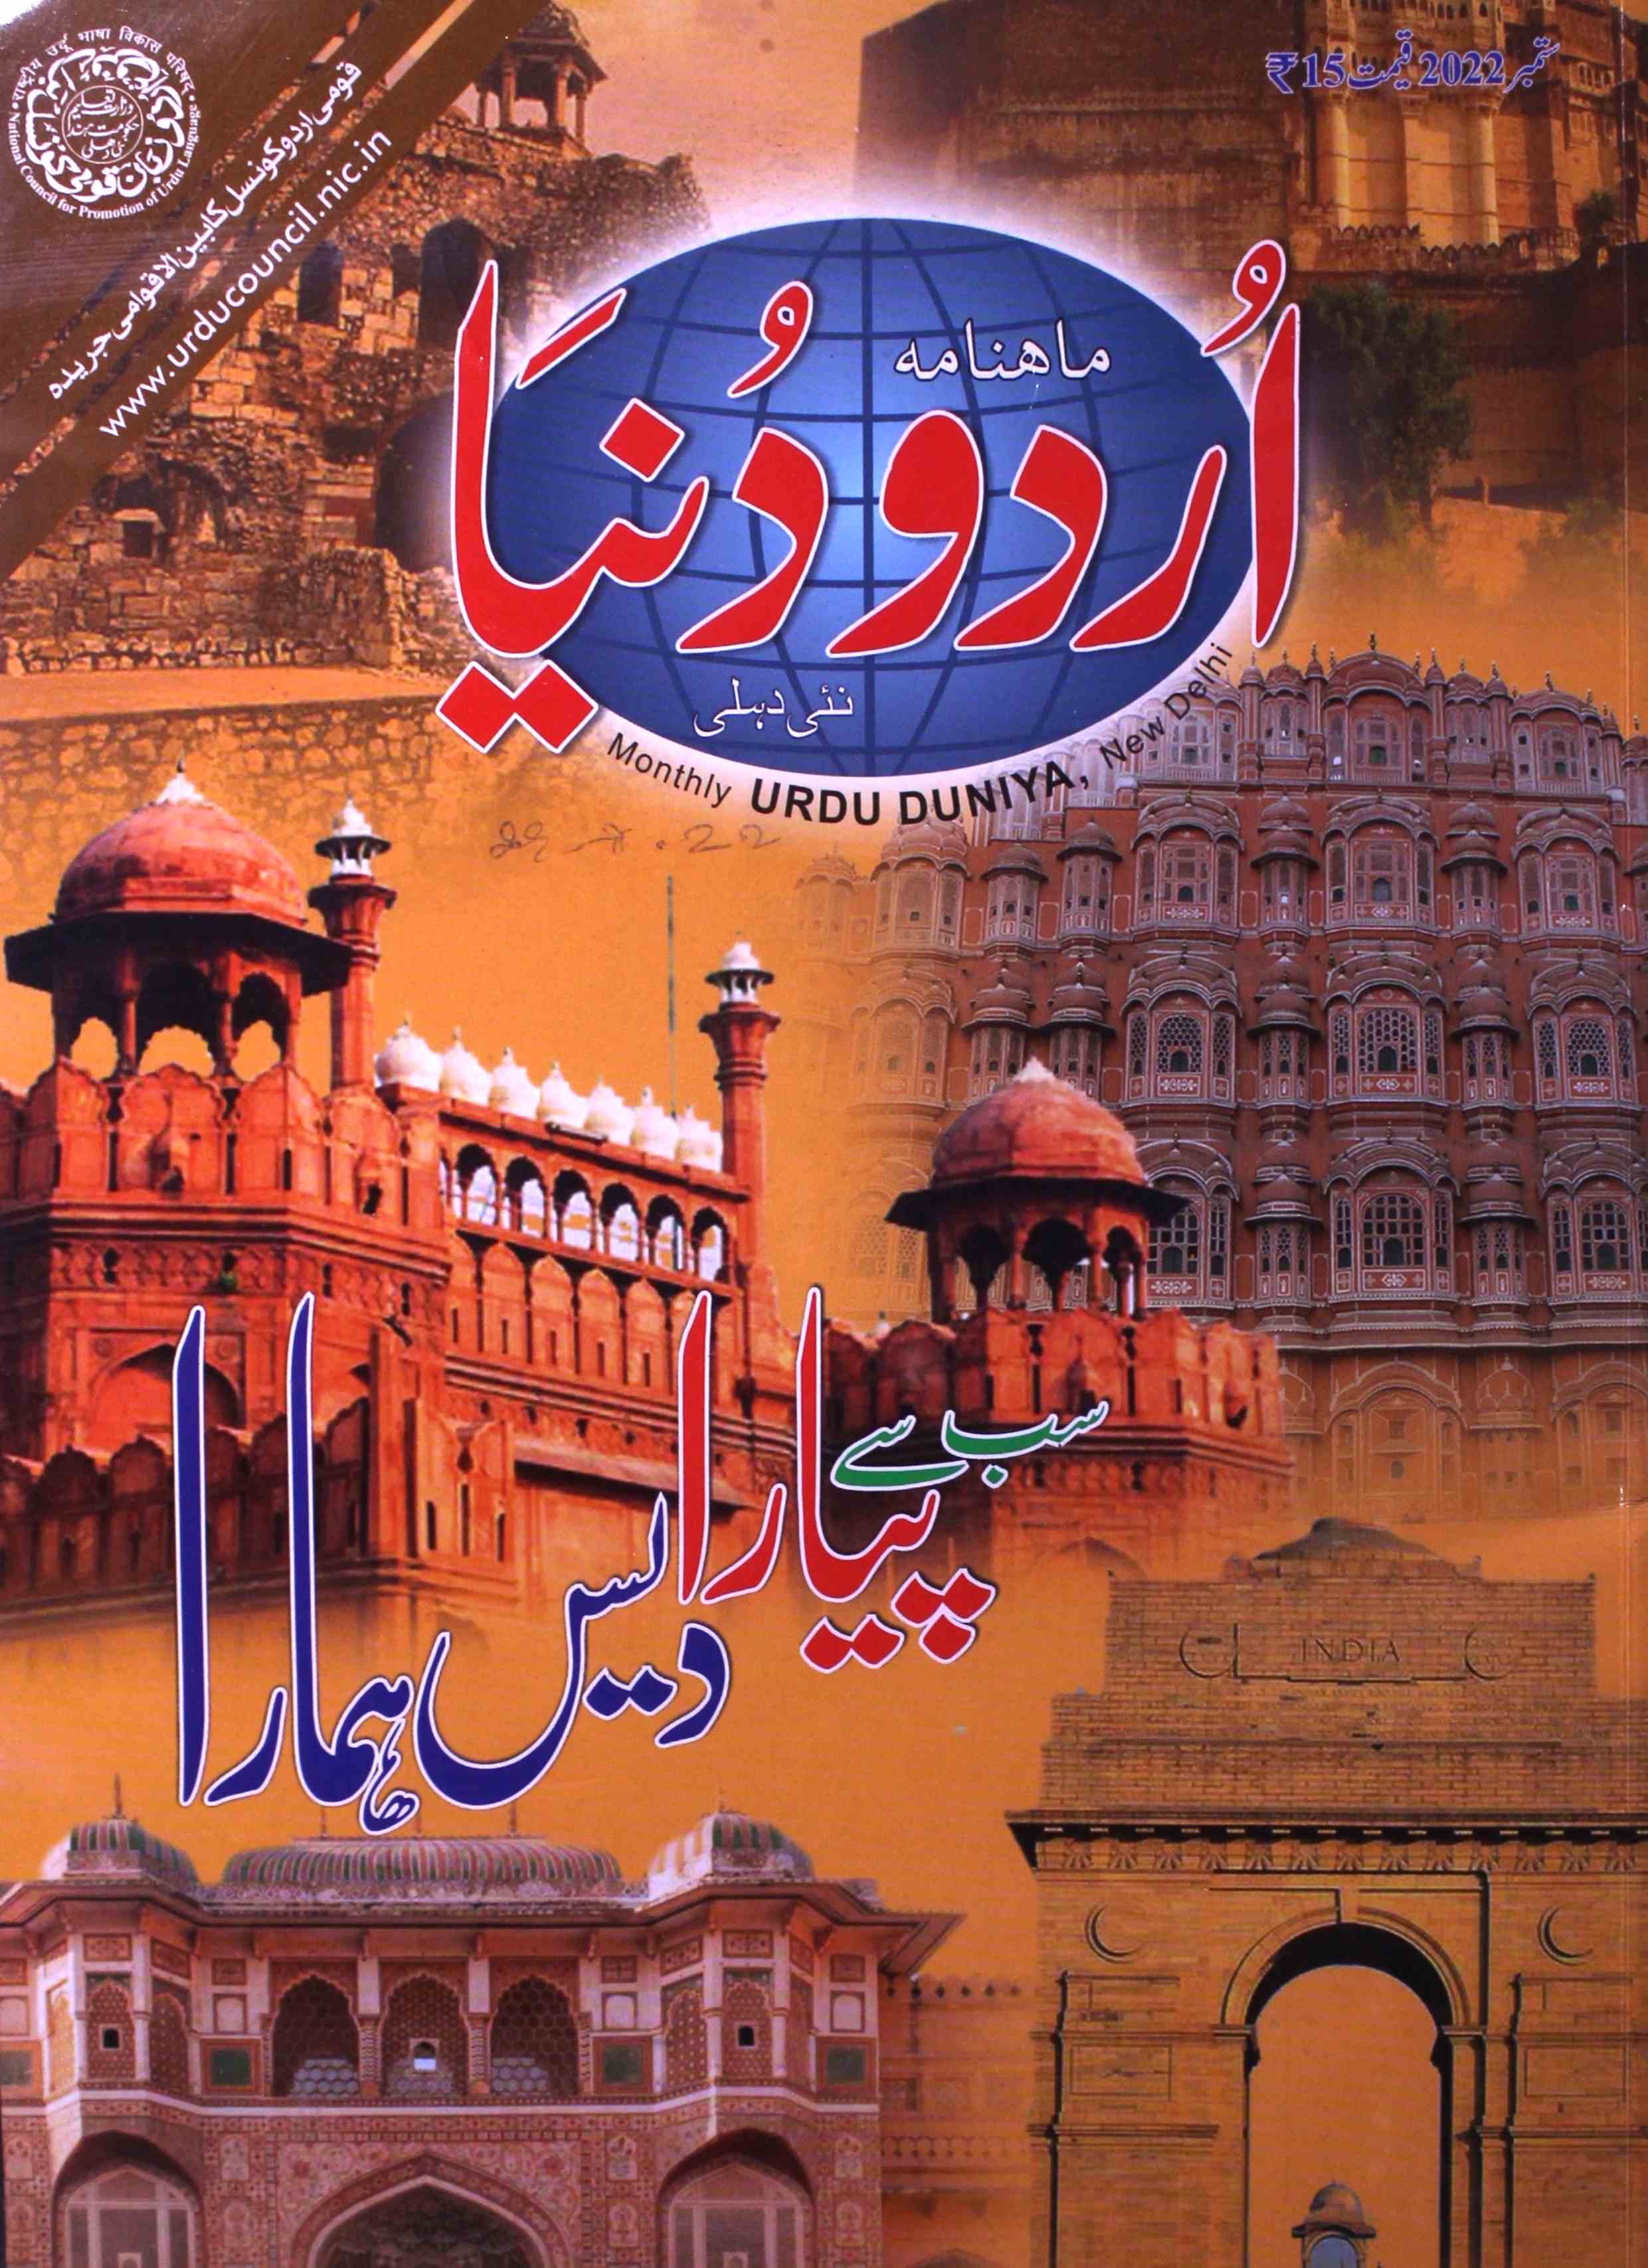 Urdu Duniya Delhi Jild-24 Shumara-9-Shumara Number-009